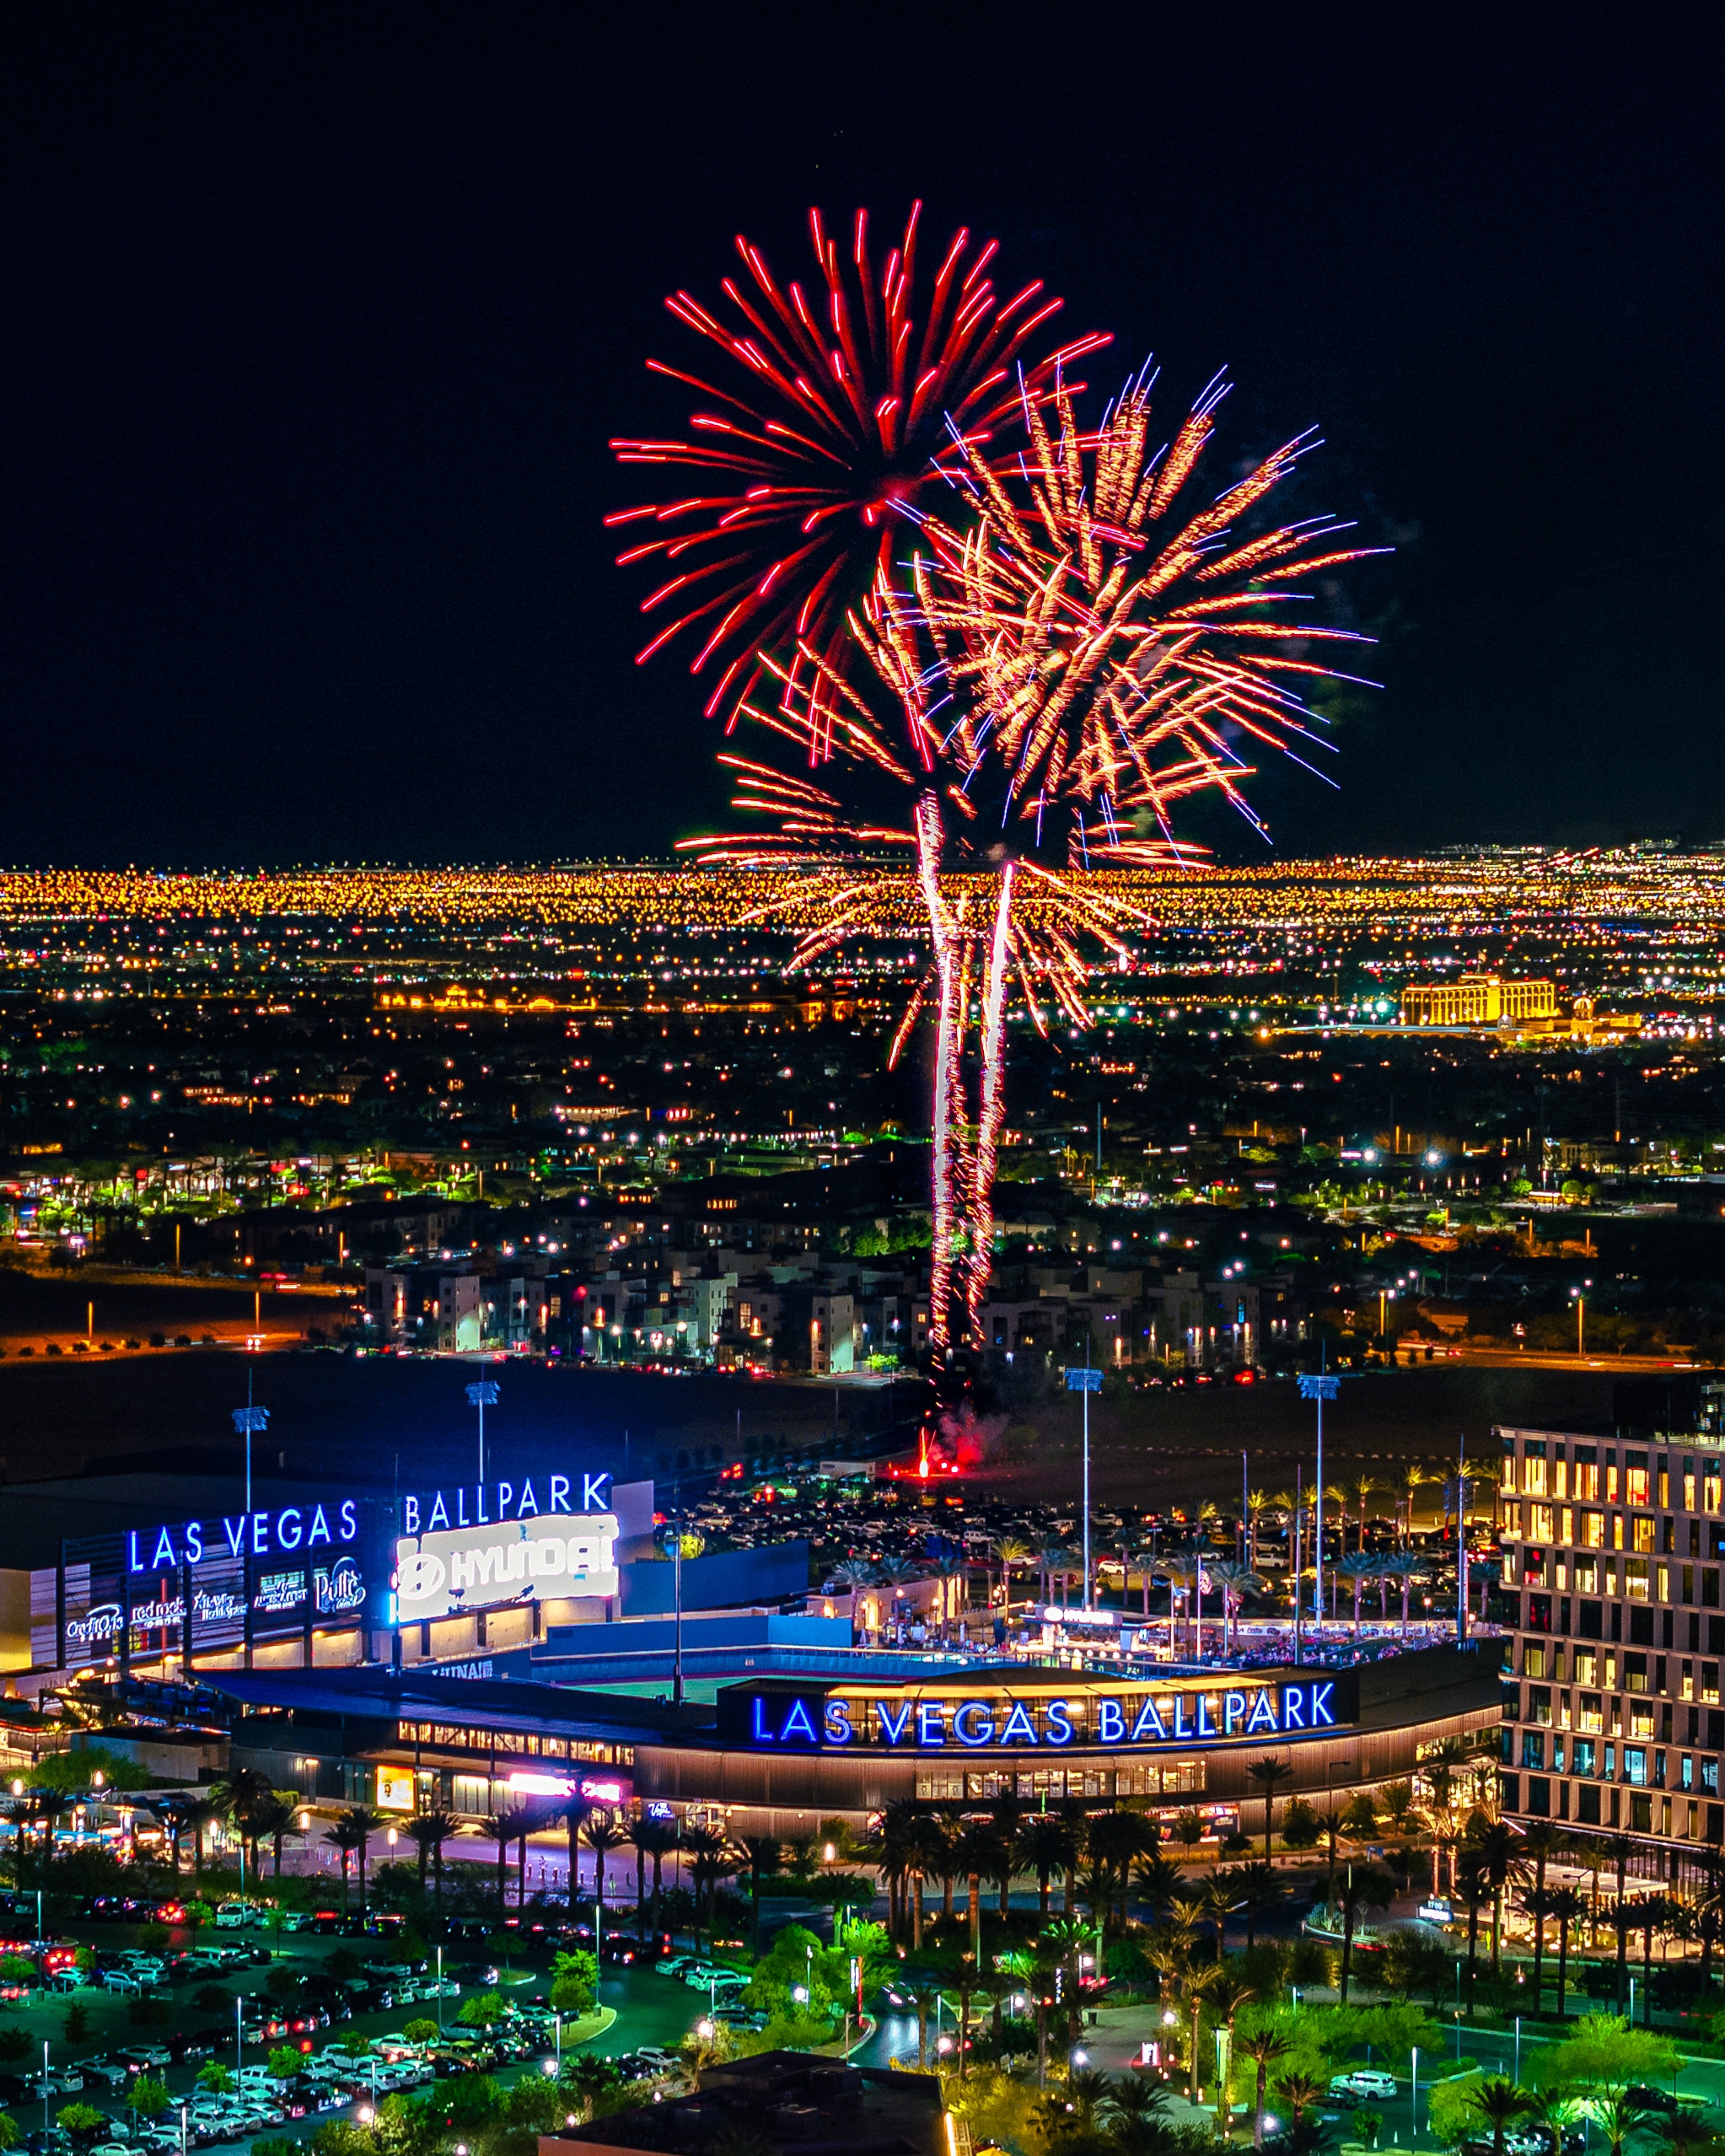 Las Vegas Ballpark Fireworks